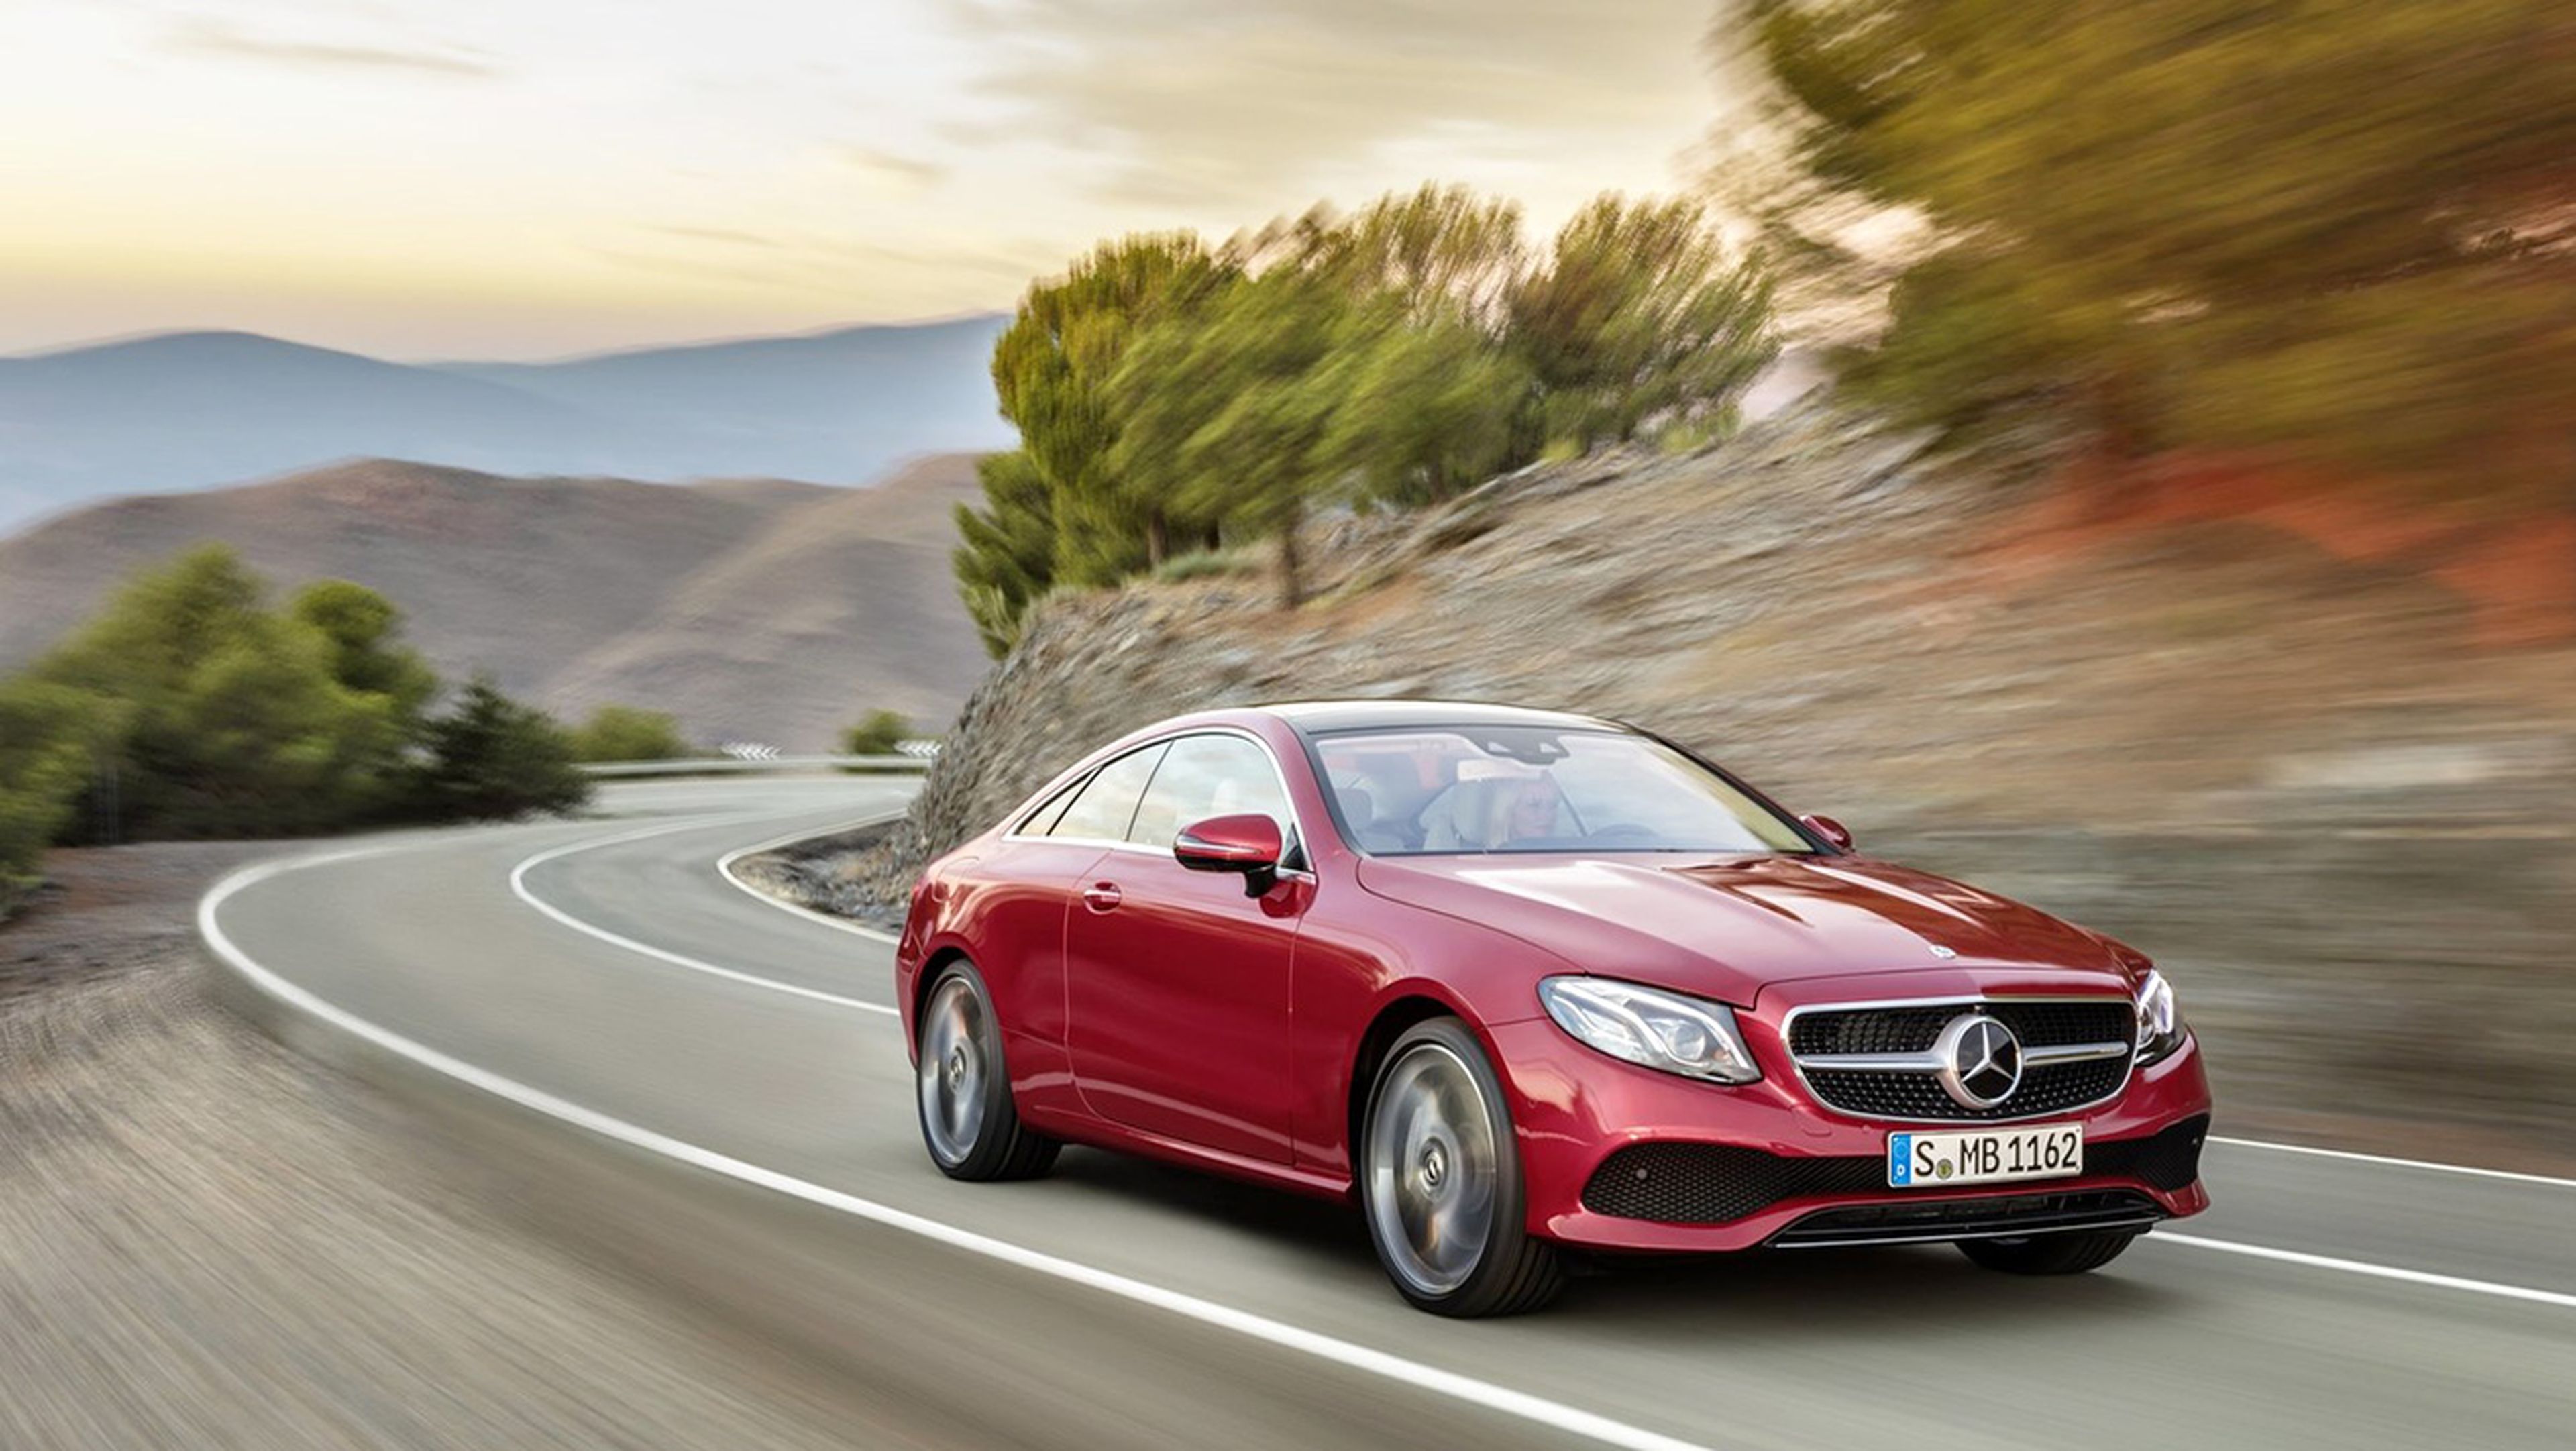 Los deportivos más vendidos en febrero en España - Mercedes-Benz Clase E - 7 unidades